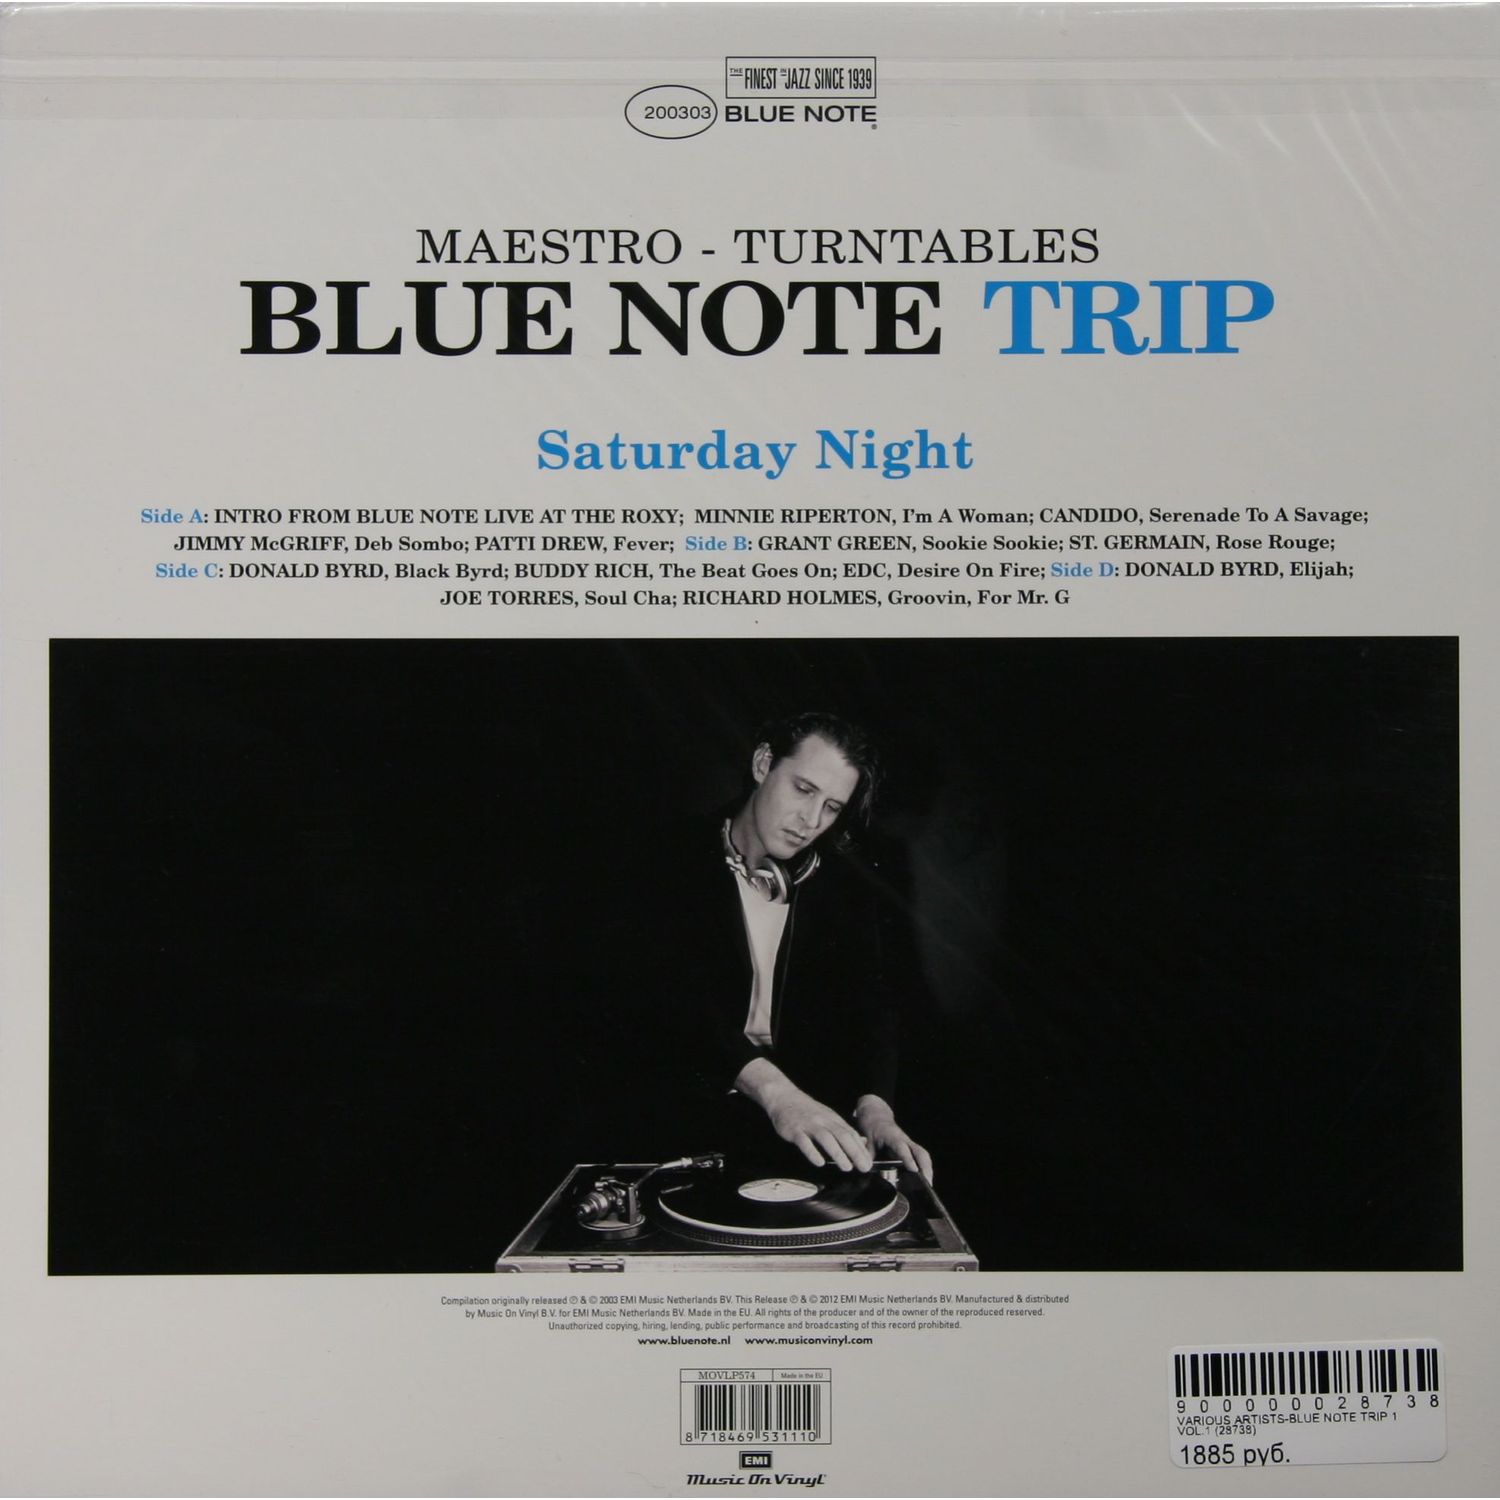 blue note trip saturday night